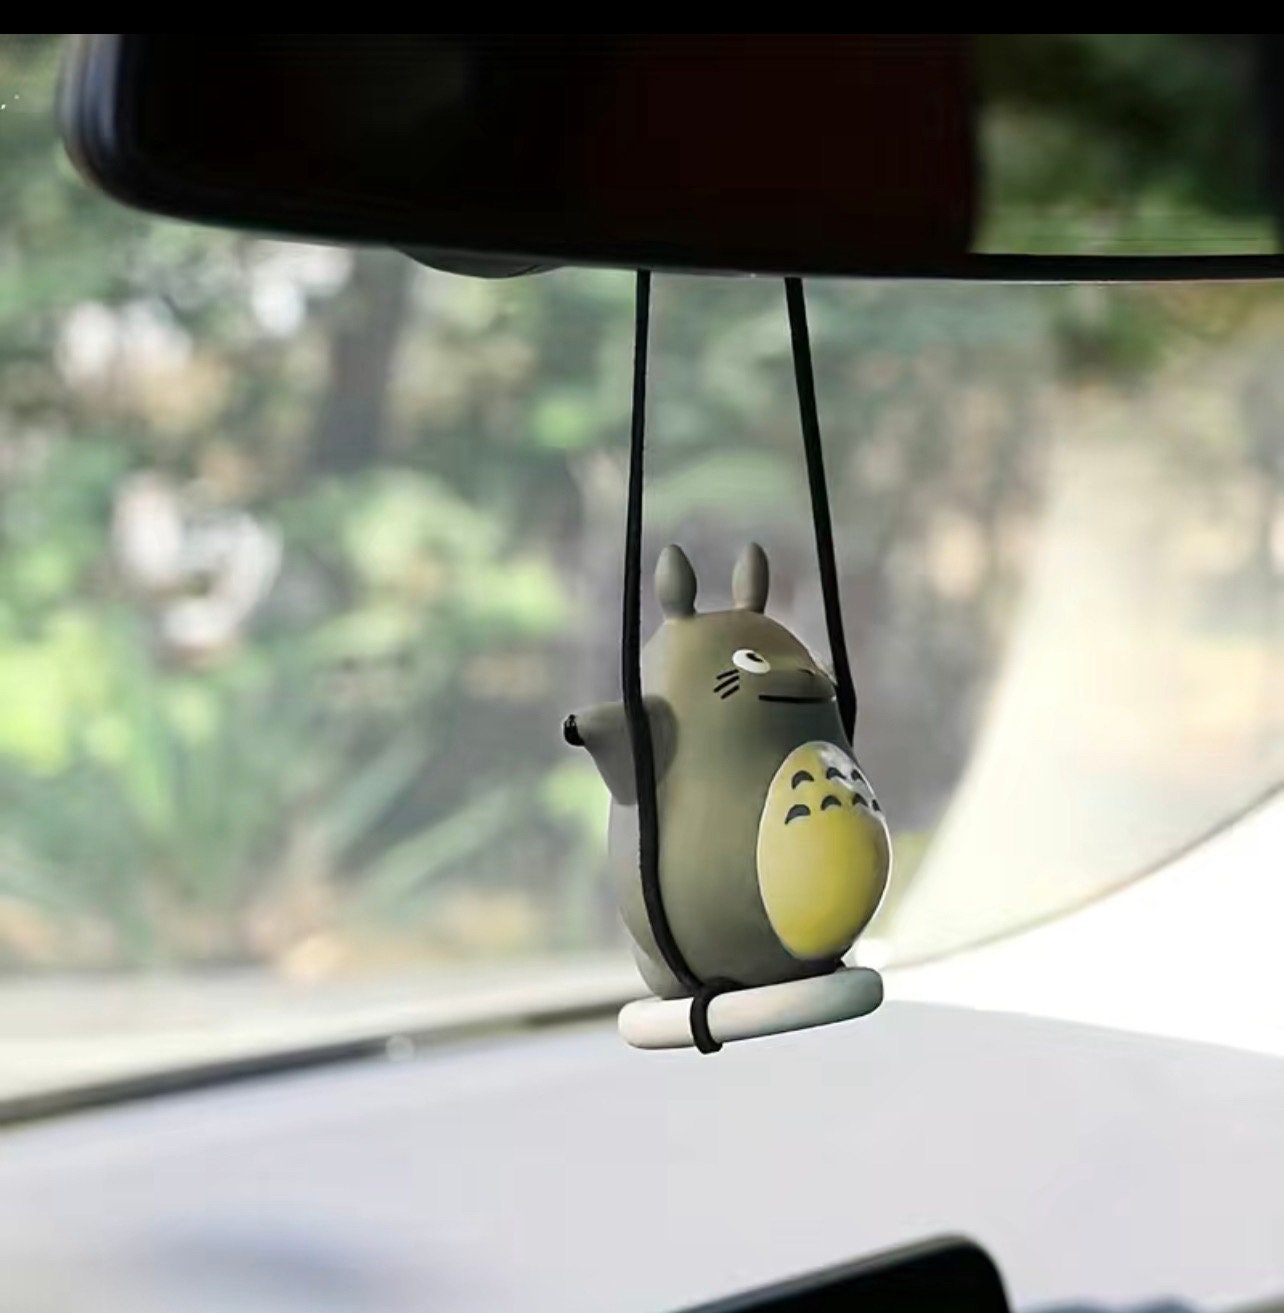 Studio Ghibli My Neighbor Totoro Swing Car Pendant Accessory カとなりのトトロ 